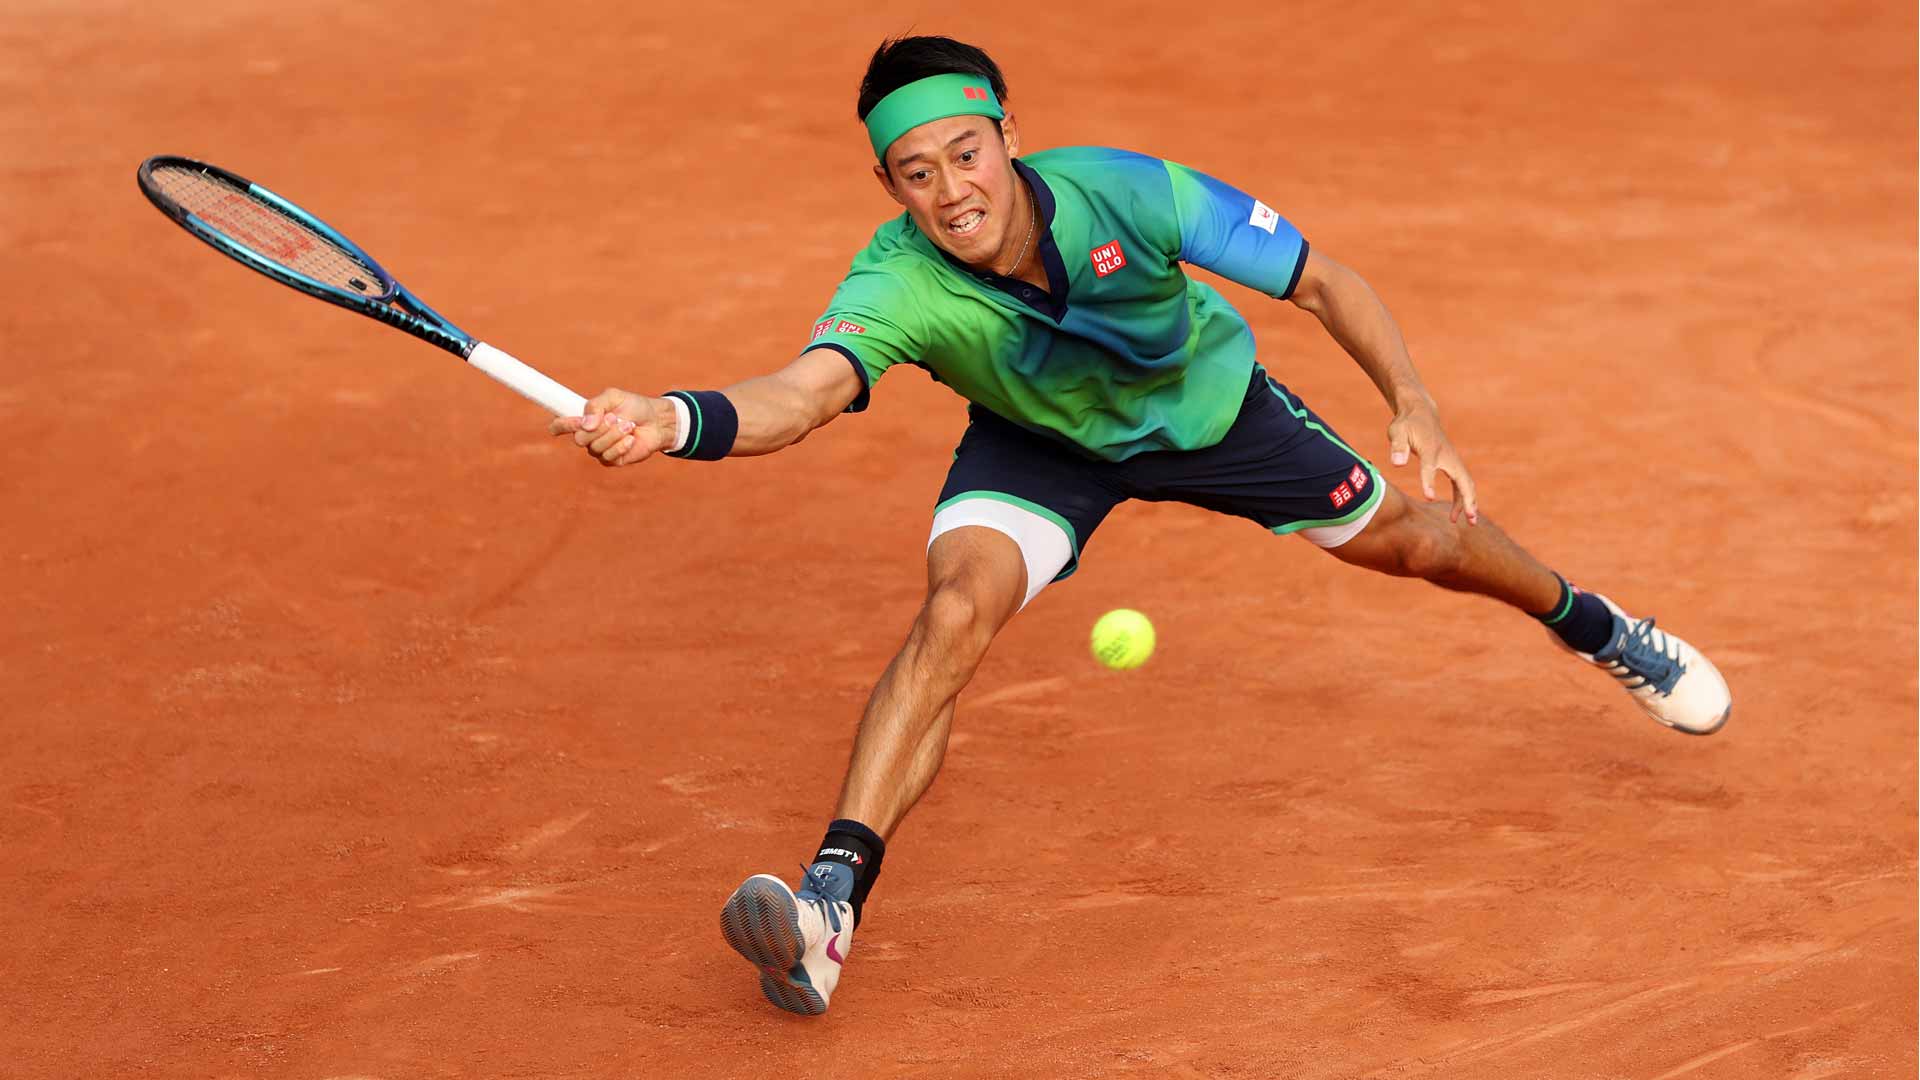 Nishikori wins 5-set thriller, Gasquet earns emotional victory at Roland Garros